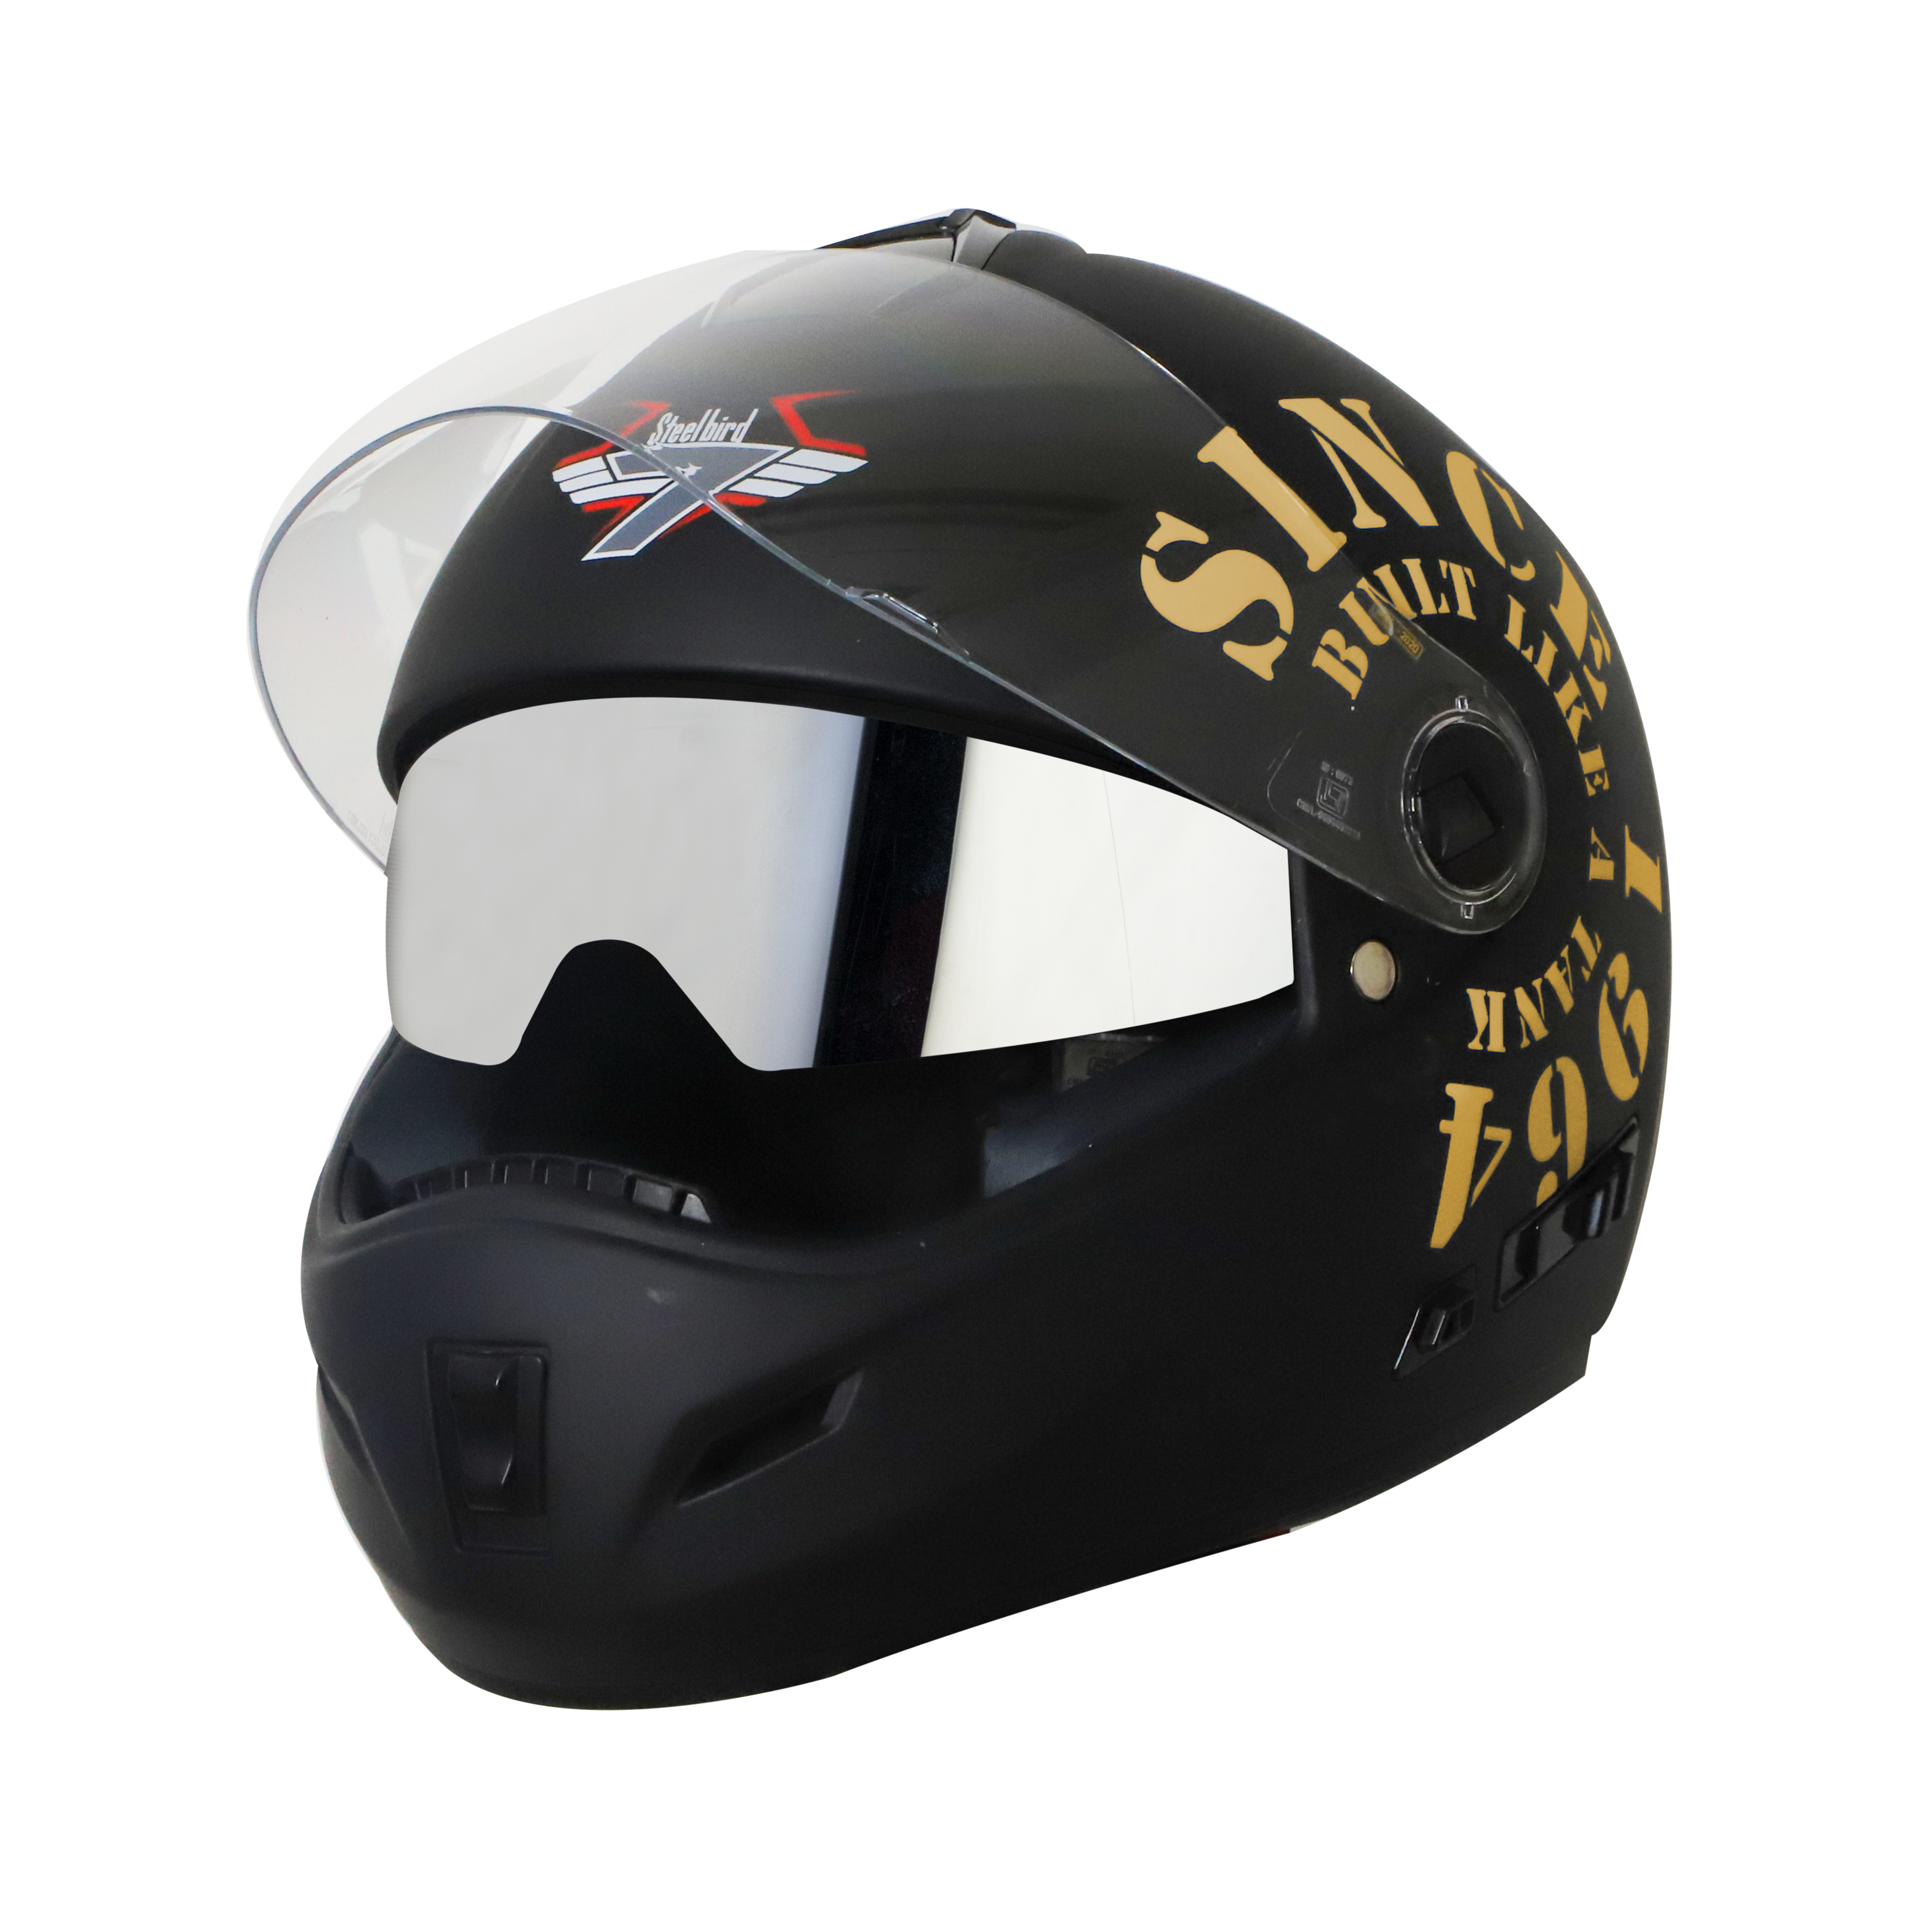 Steelbird Cyborg Tank Full Face Helmet With Chrome Silver Sun Shield, ISI Certified Helmet (Matt Black Gold)